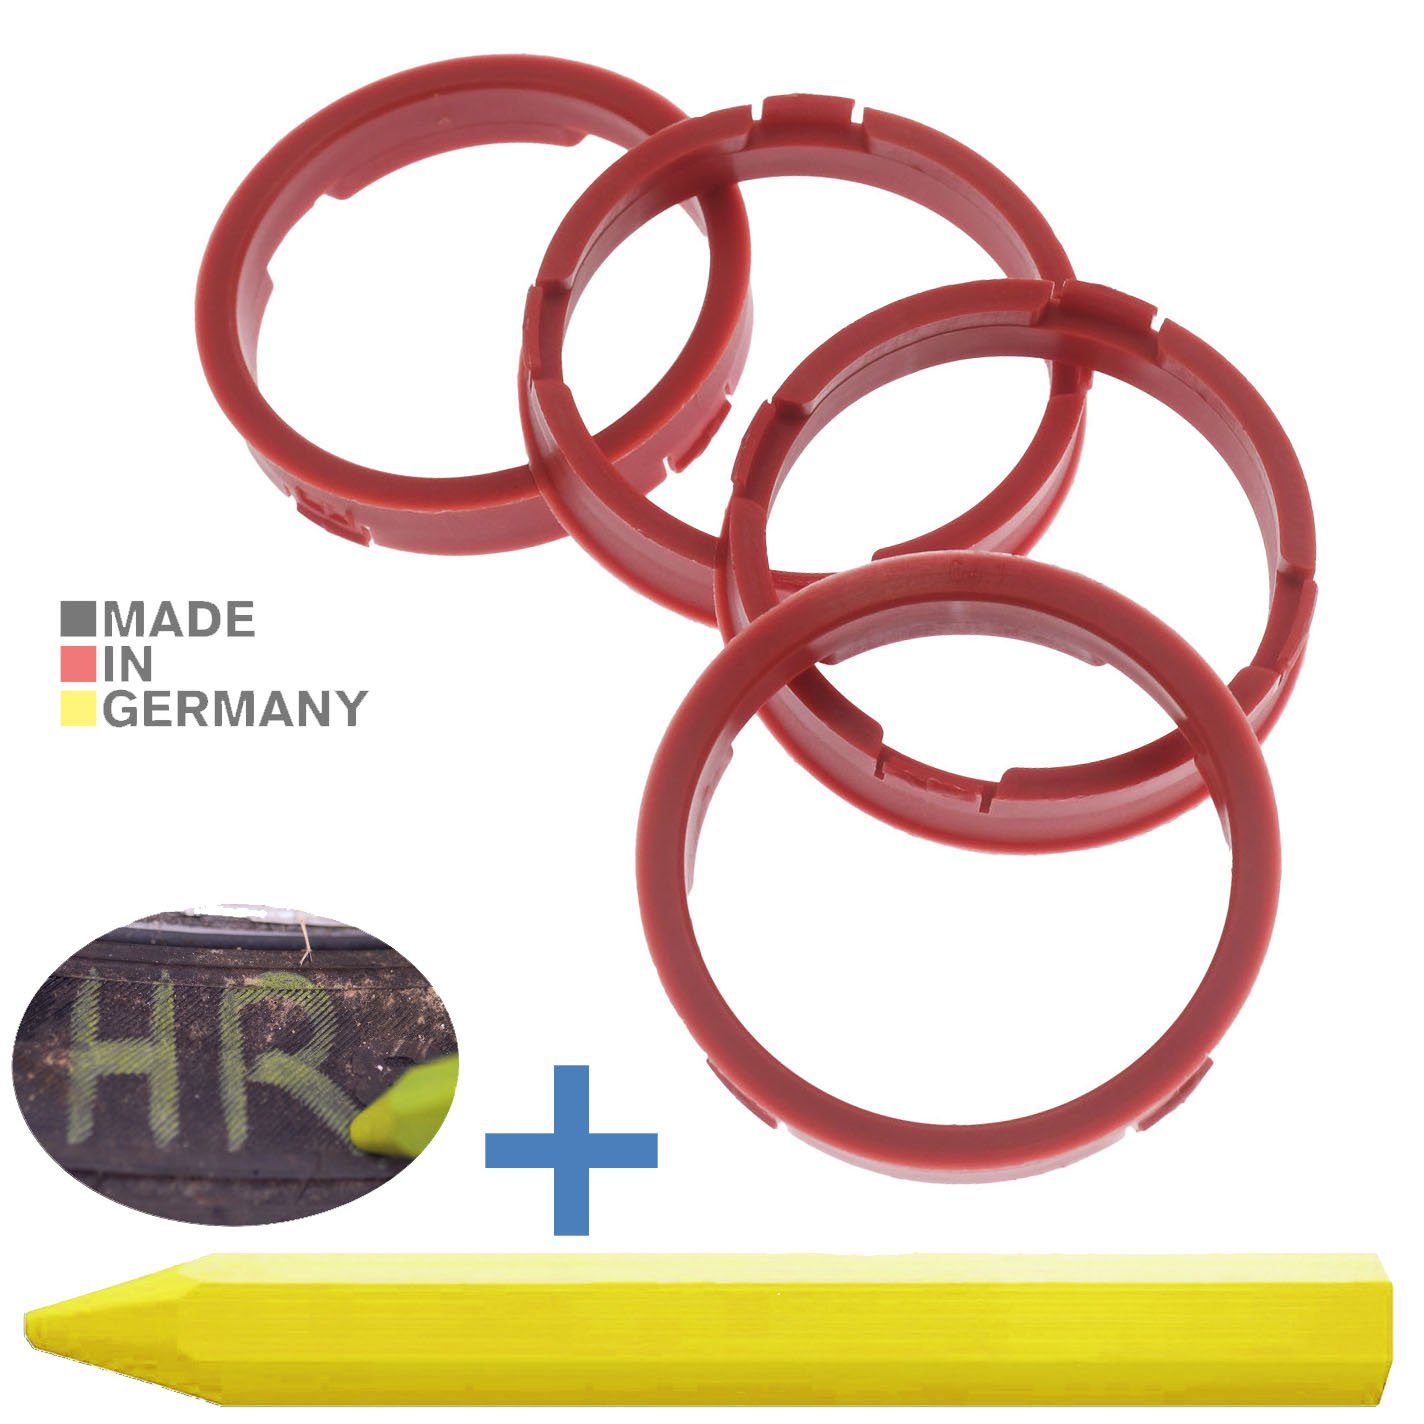 RKC Reifenstift 4X Zentrierringe Dunkelrot Felgen Ringe + 1x Reifen Kreide Fett Stift, Maße: 73,1 x 64,1 mm